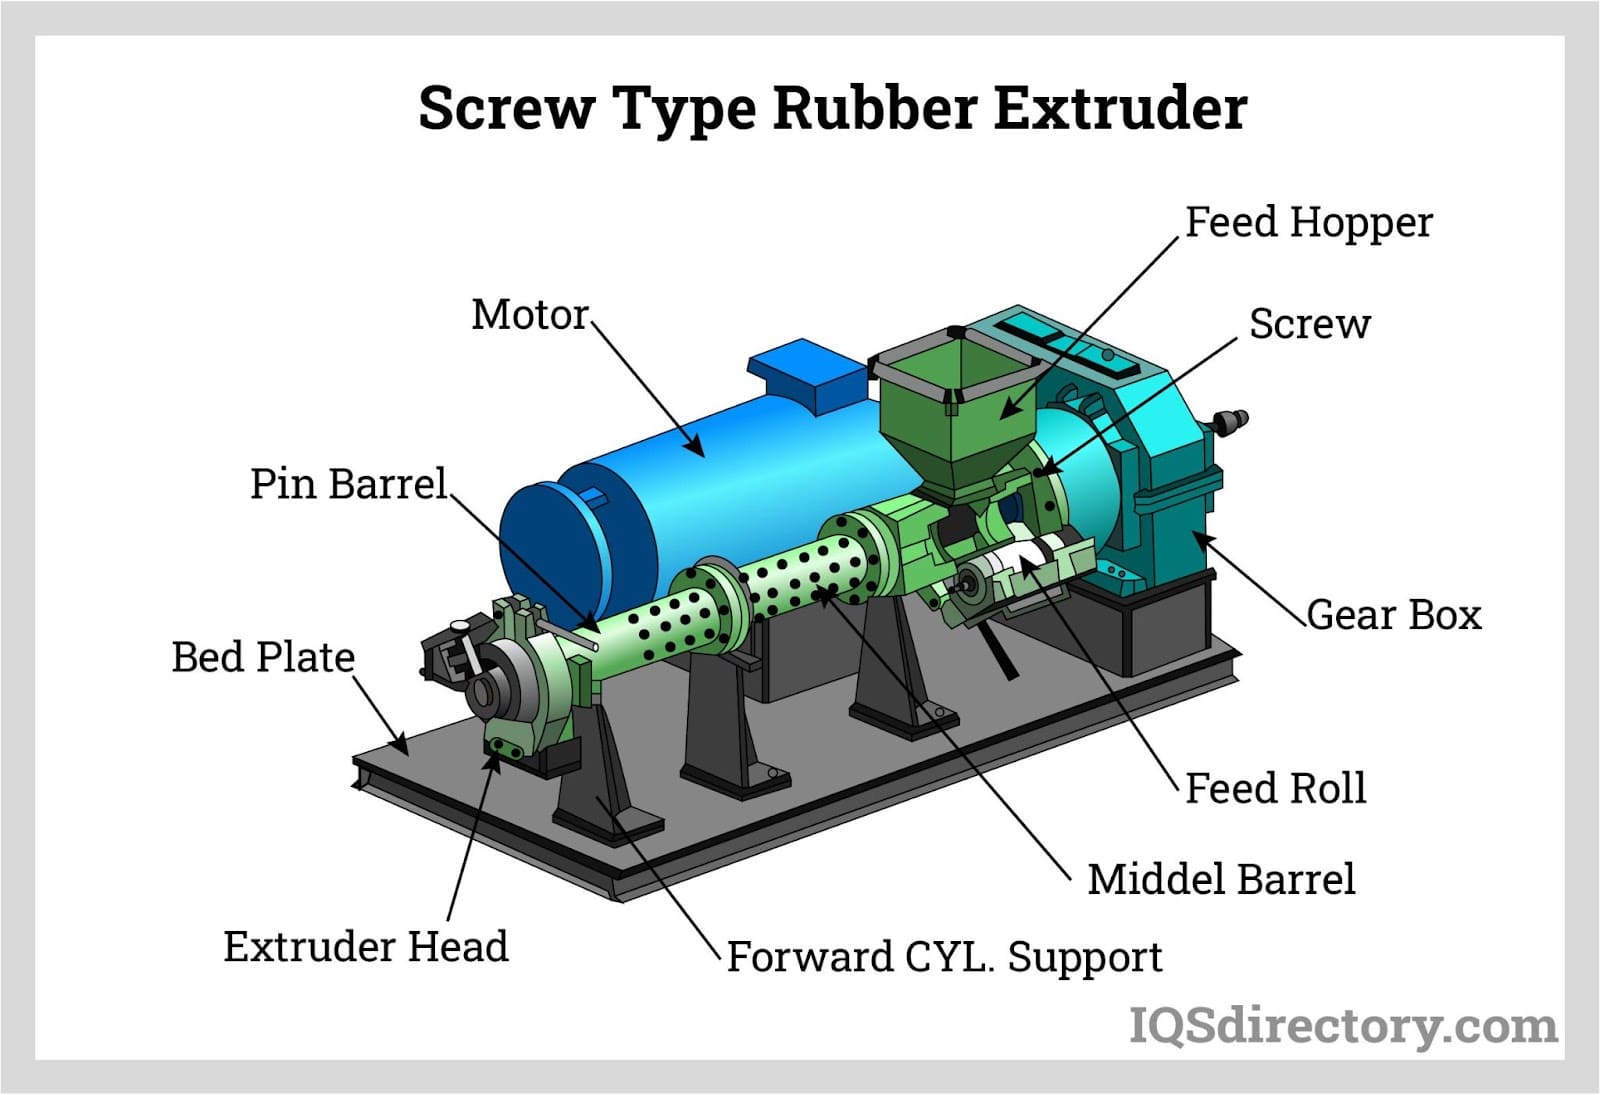 Screw Type Rubber Extruder